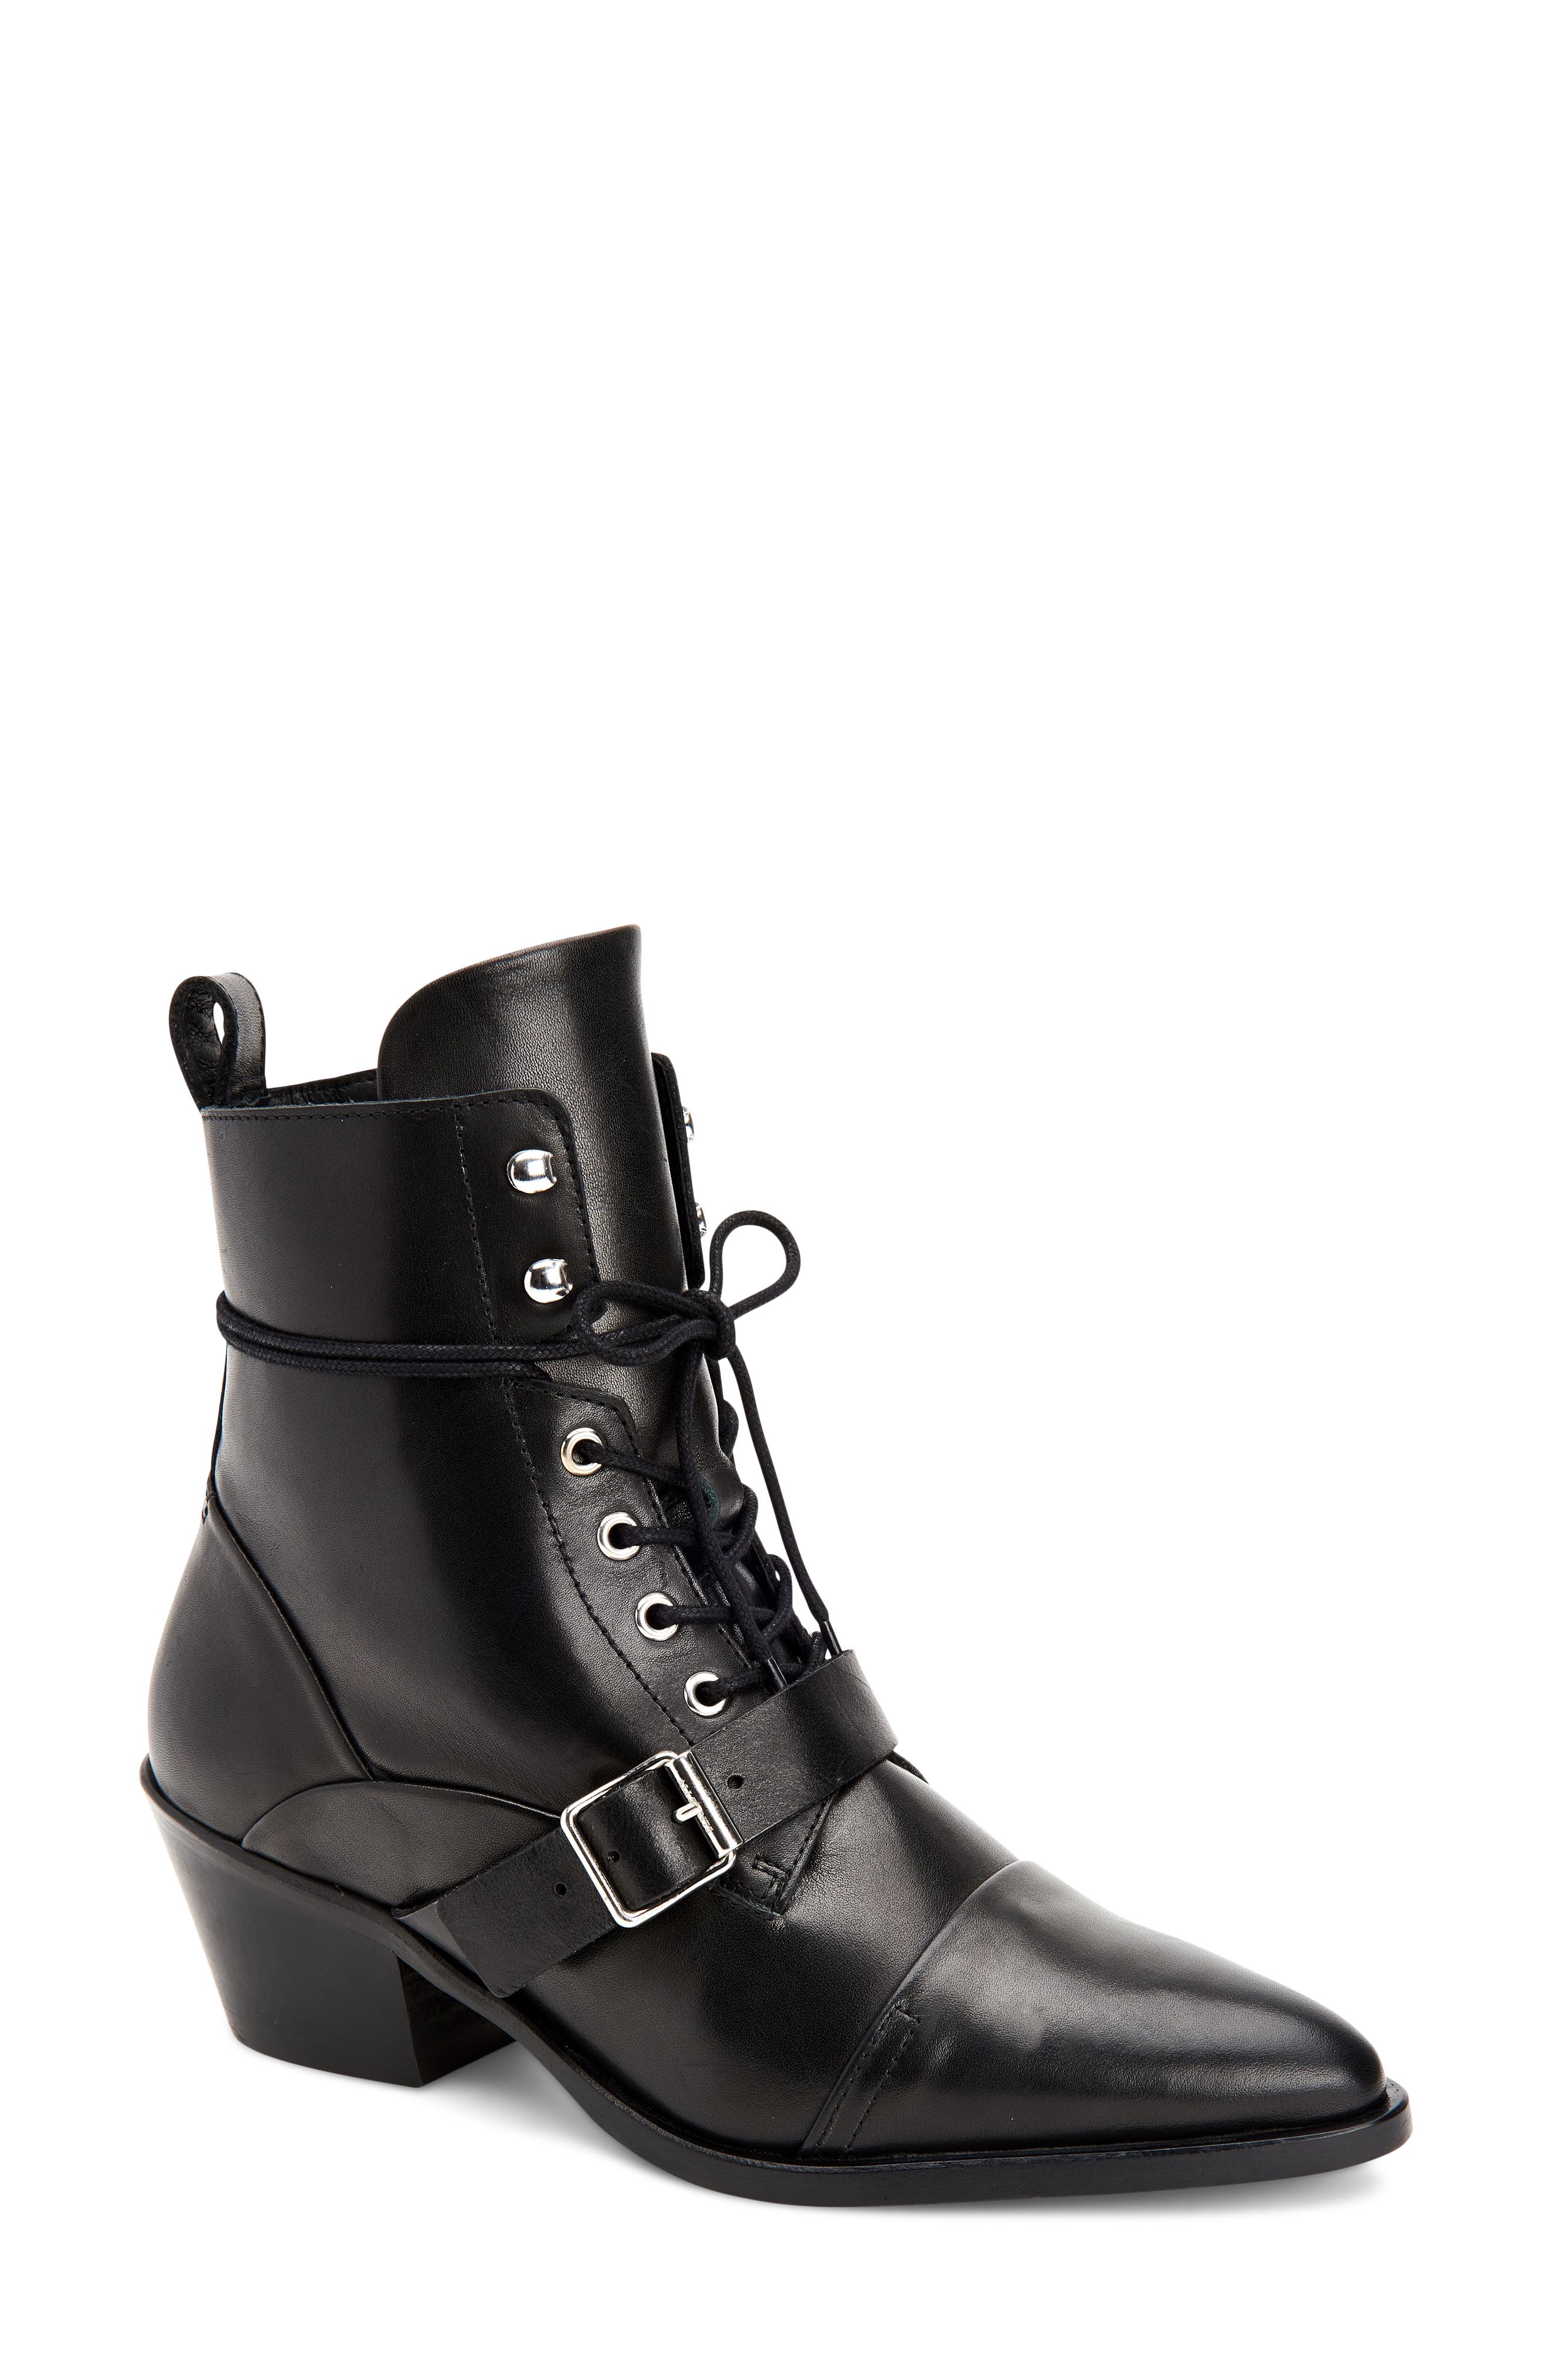 Allsaints Katy Boot In Black/ Black Leather